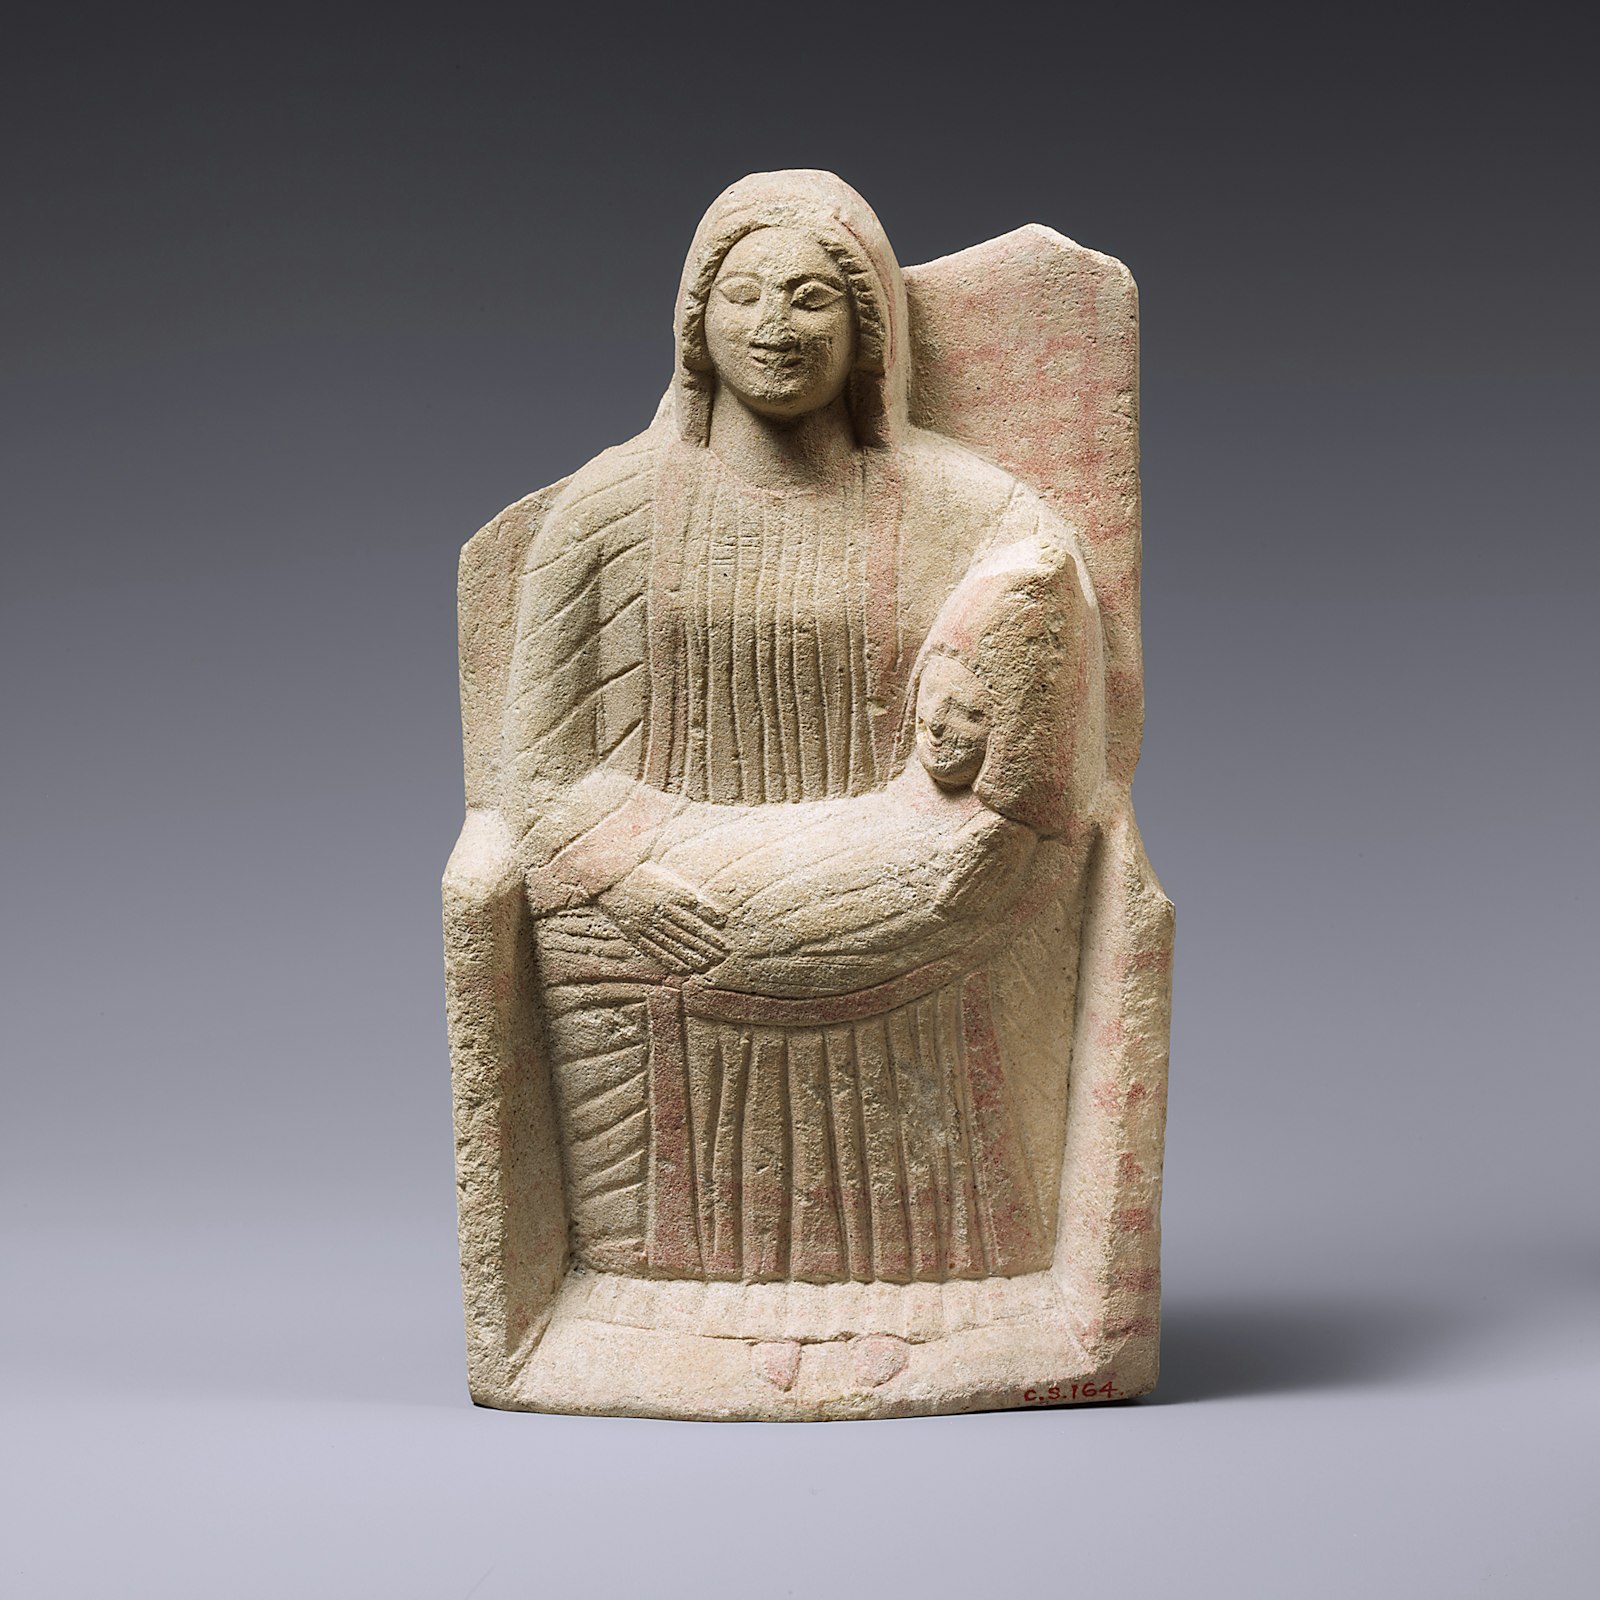 seated-limestone-kourotrophos-statue-cypriot-5th-century-bce-the-met